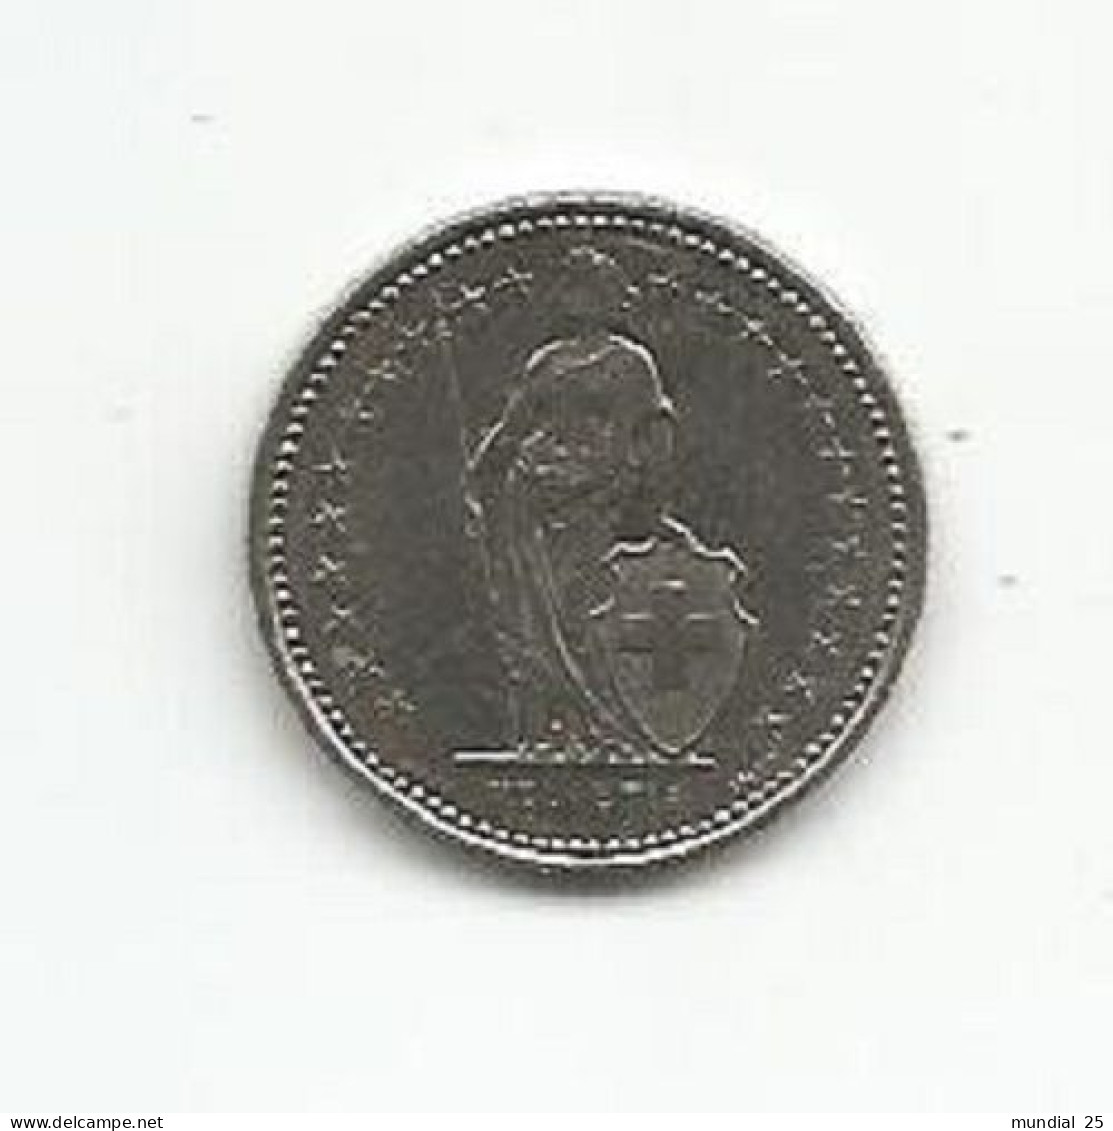 SWITZERLAND 1/2 FRANC 1983 - 1/2 Franc